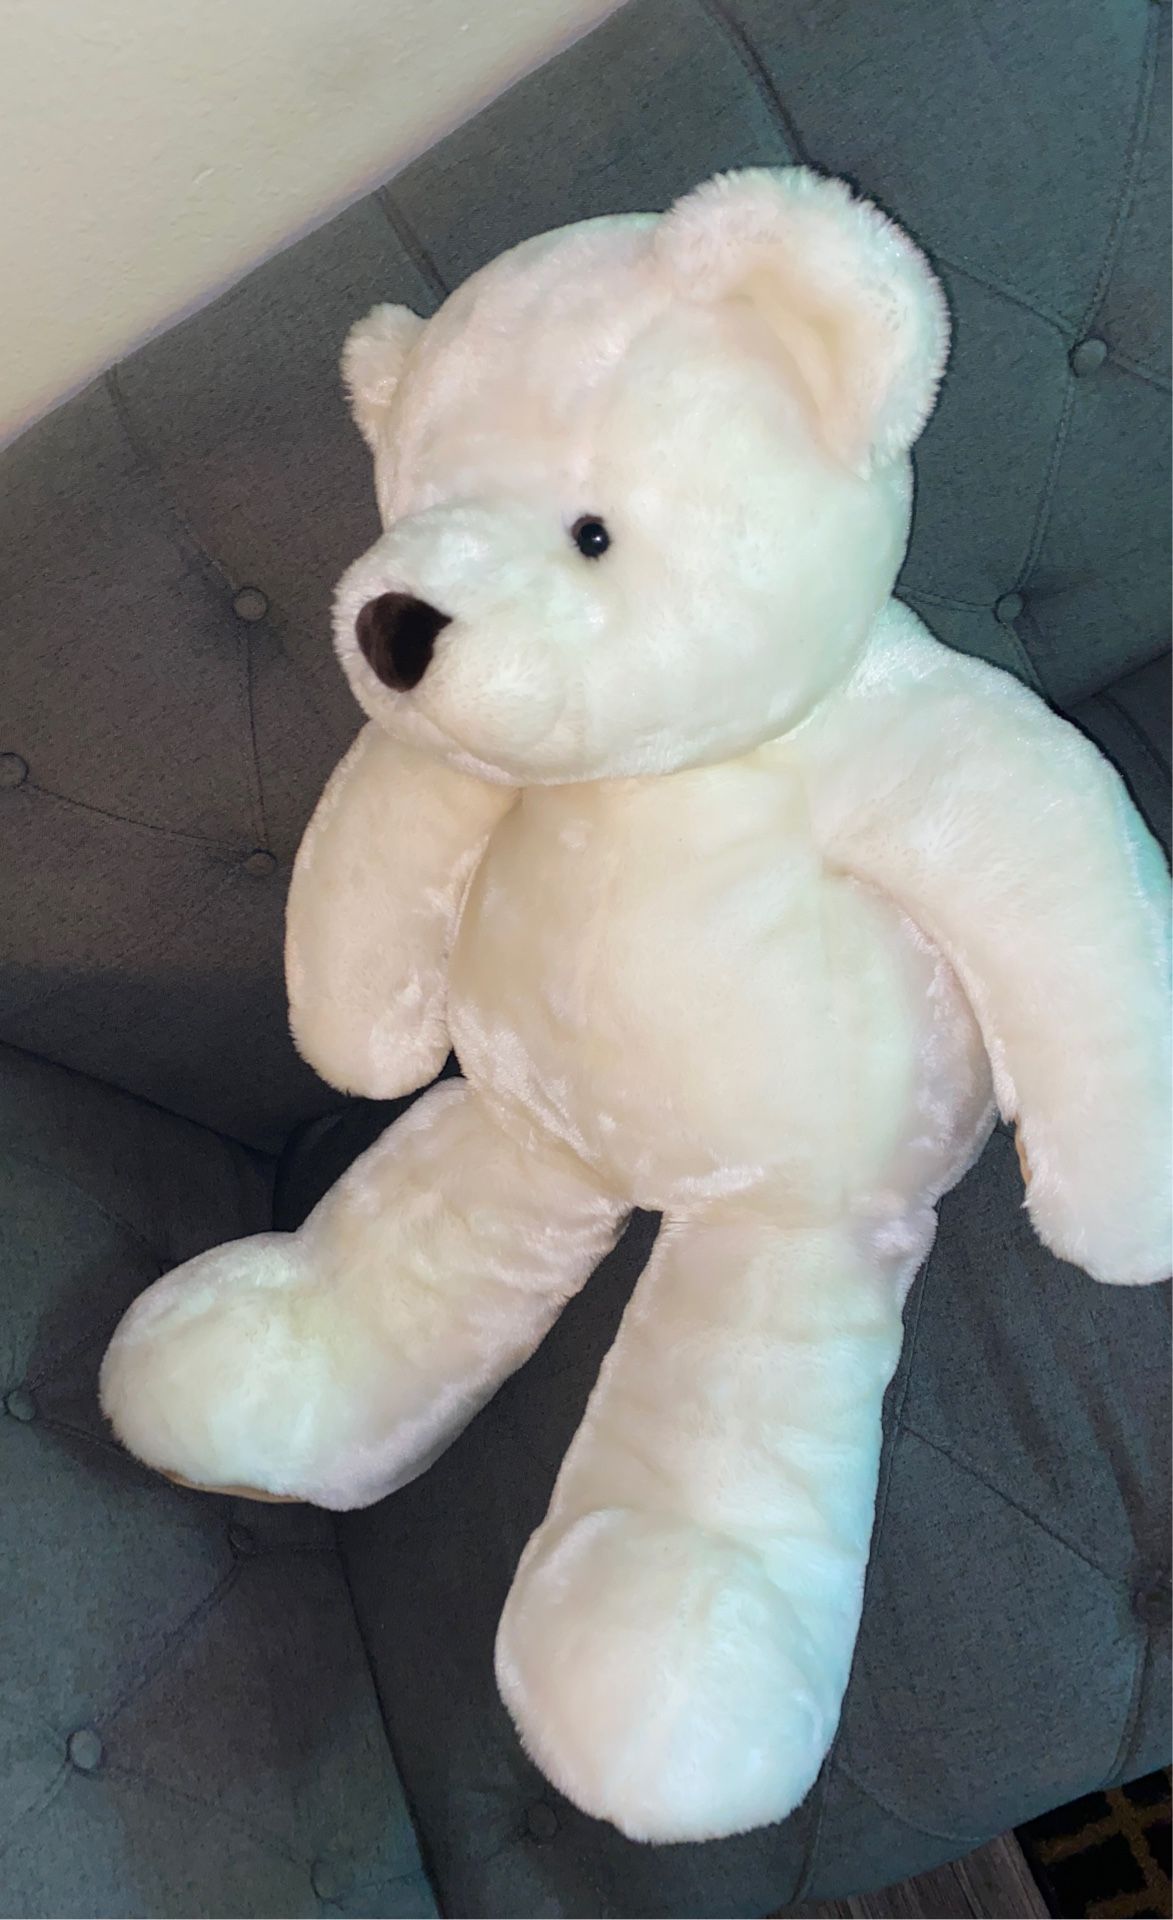 2 1/2 Foot Tall White Stuffed Teddy Bear